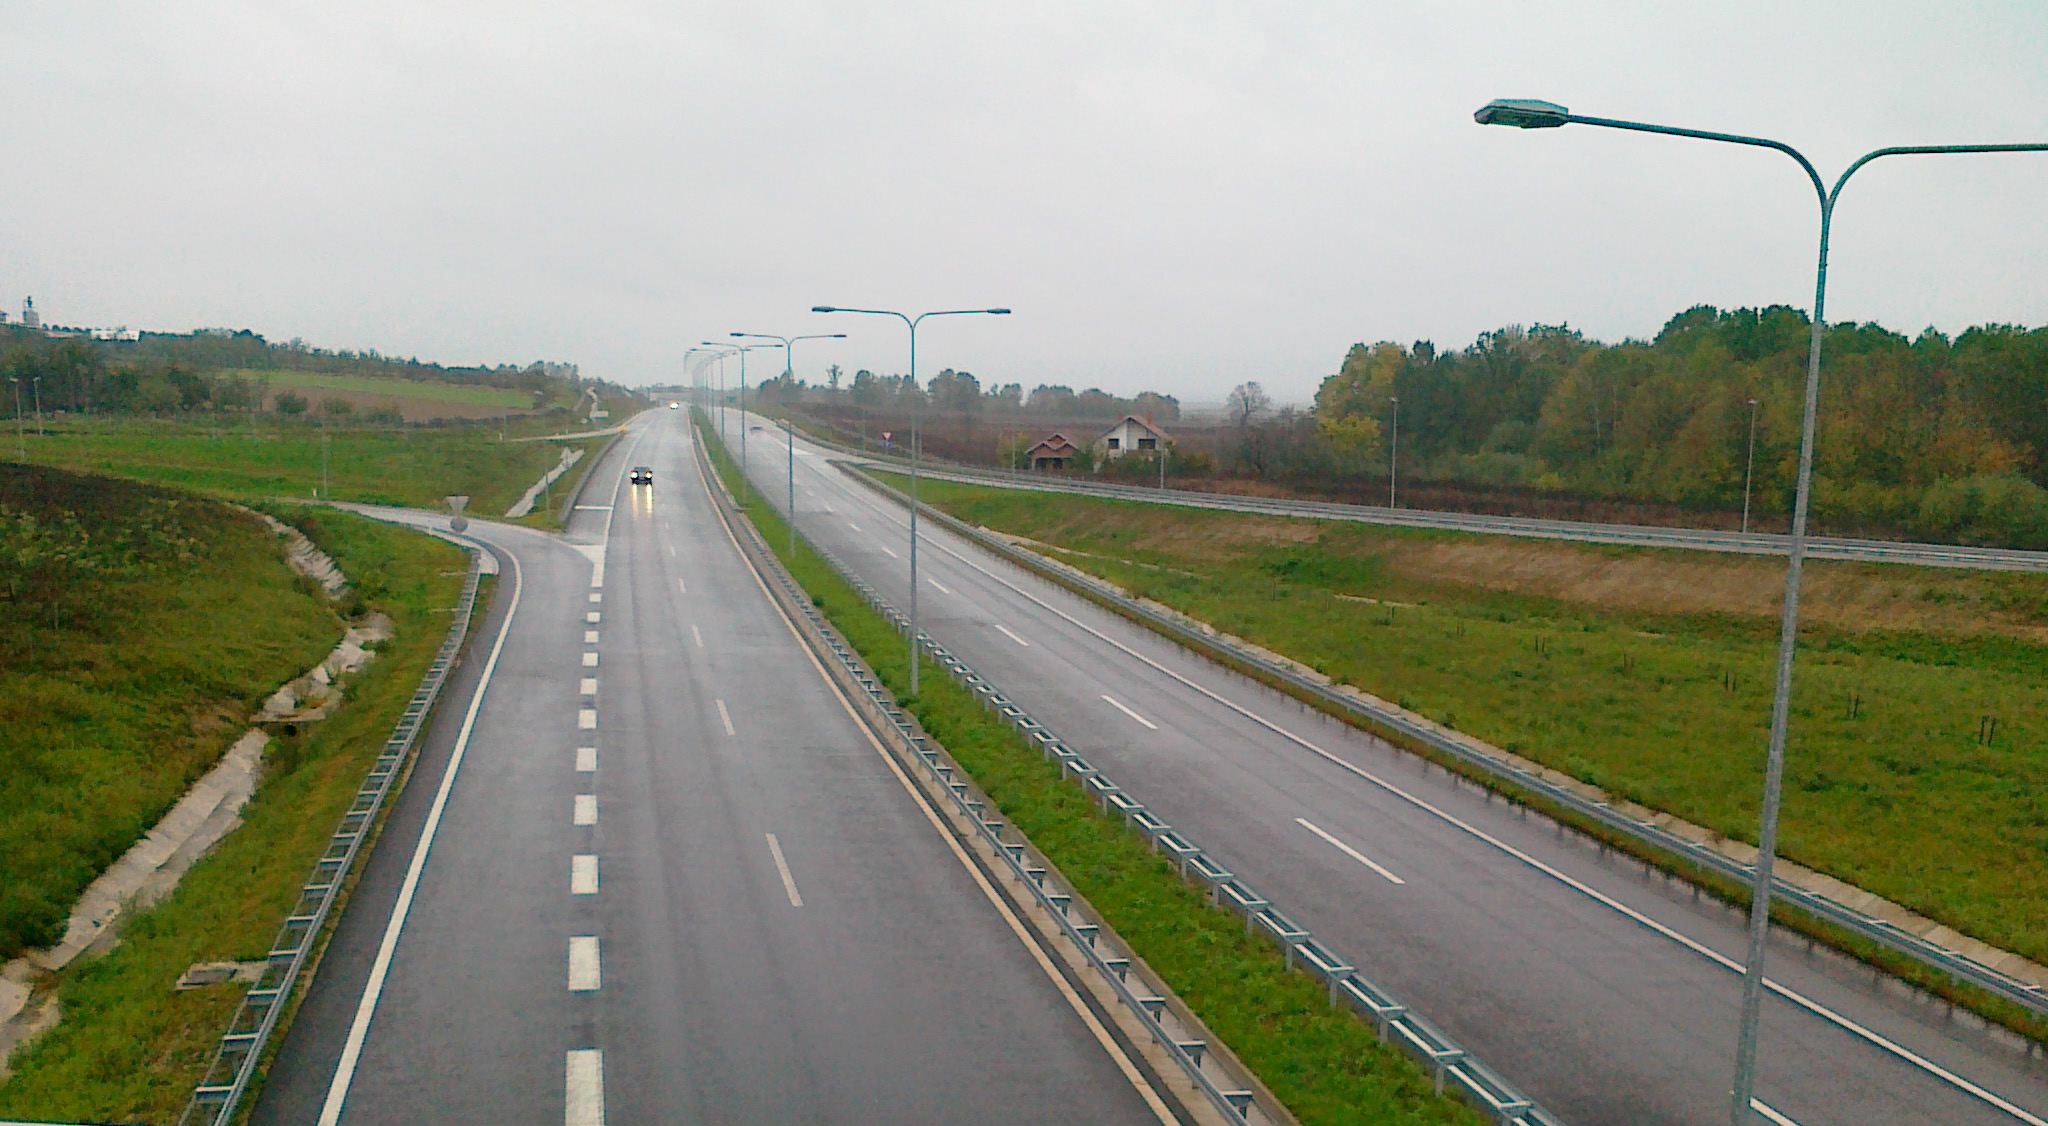 Existing motorway in use